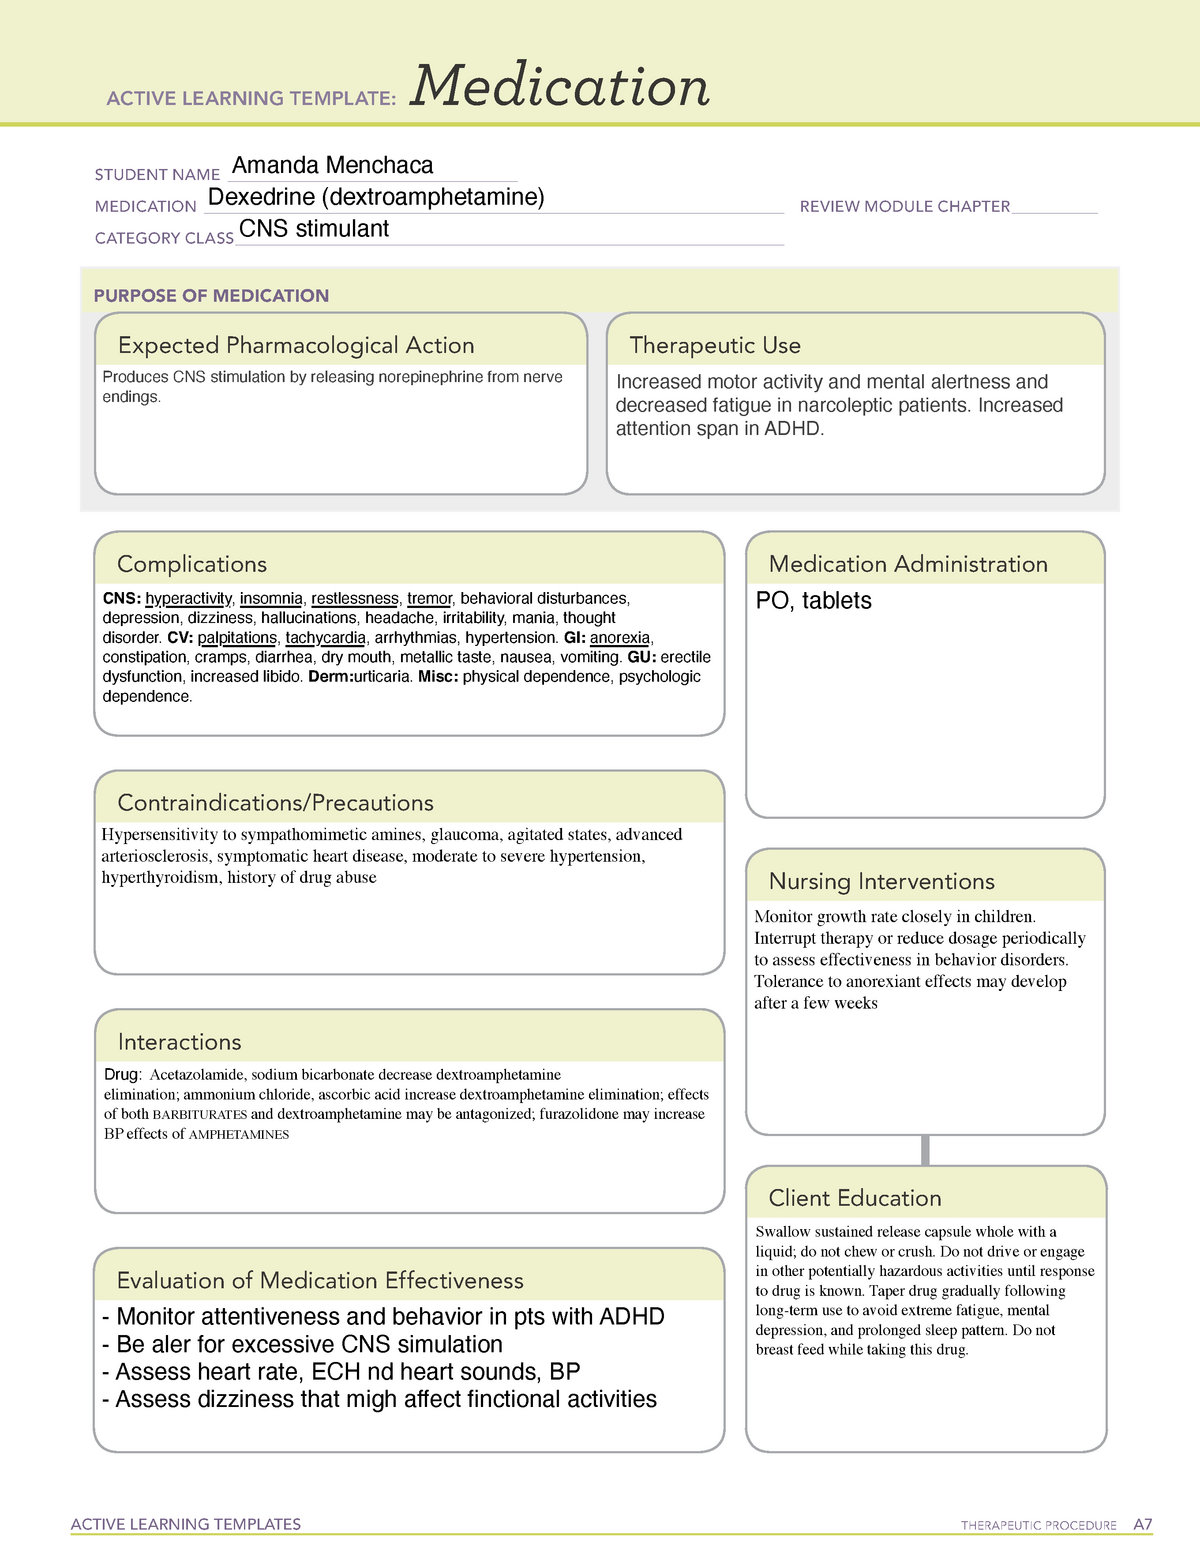 Dexedrine-MED - ATI medication card template - NUR20 Inside Medication Card Template